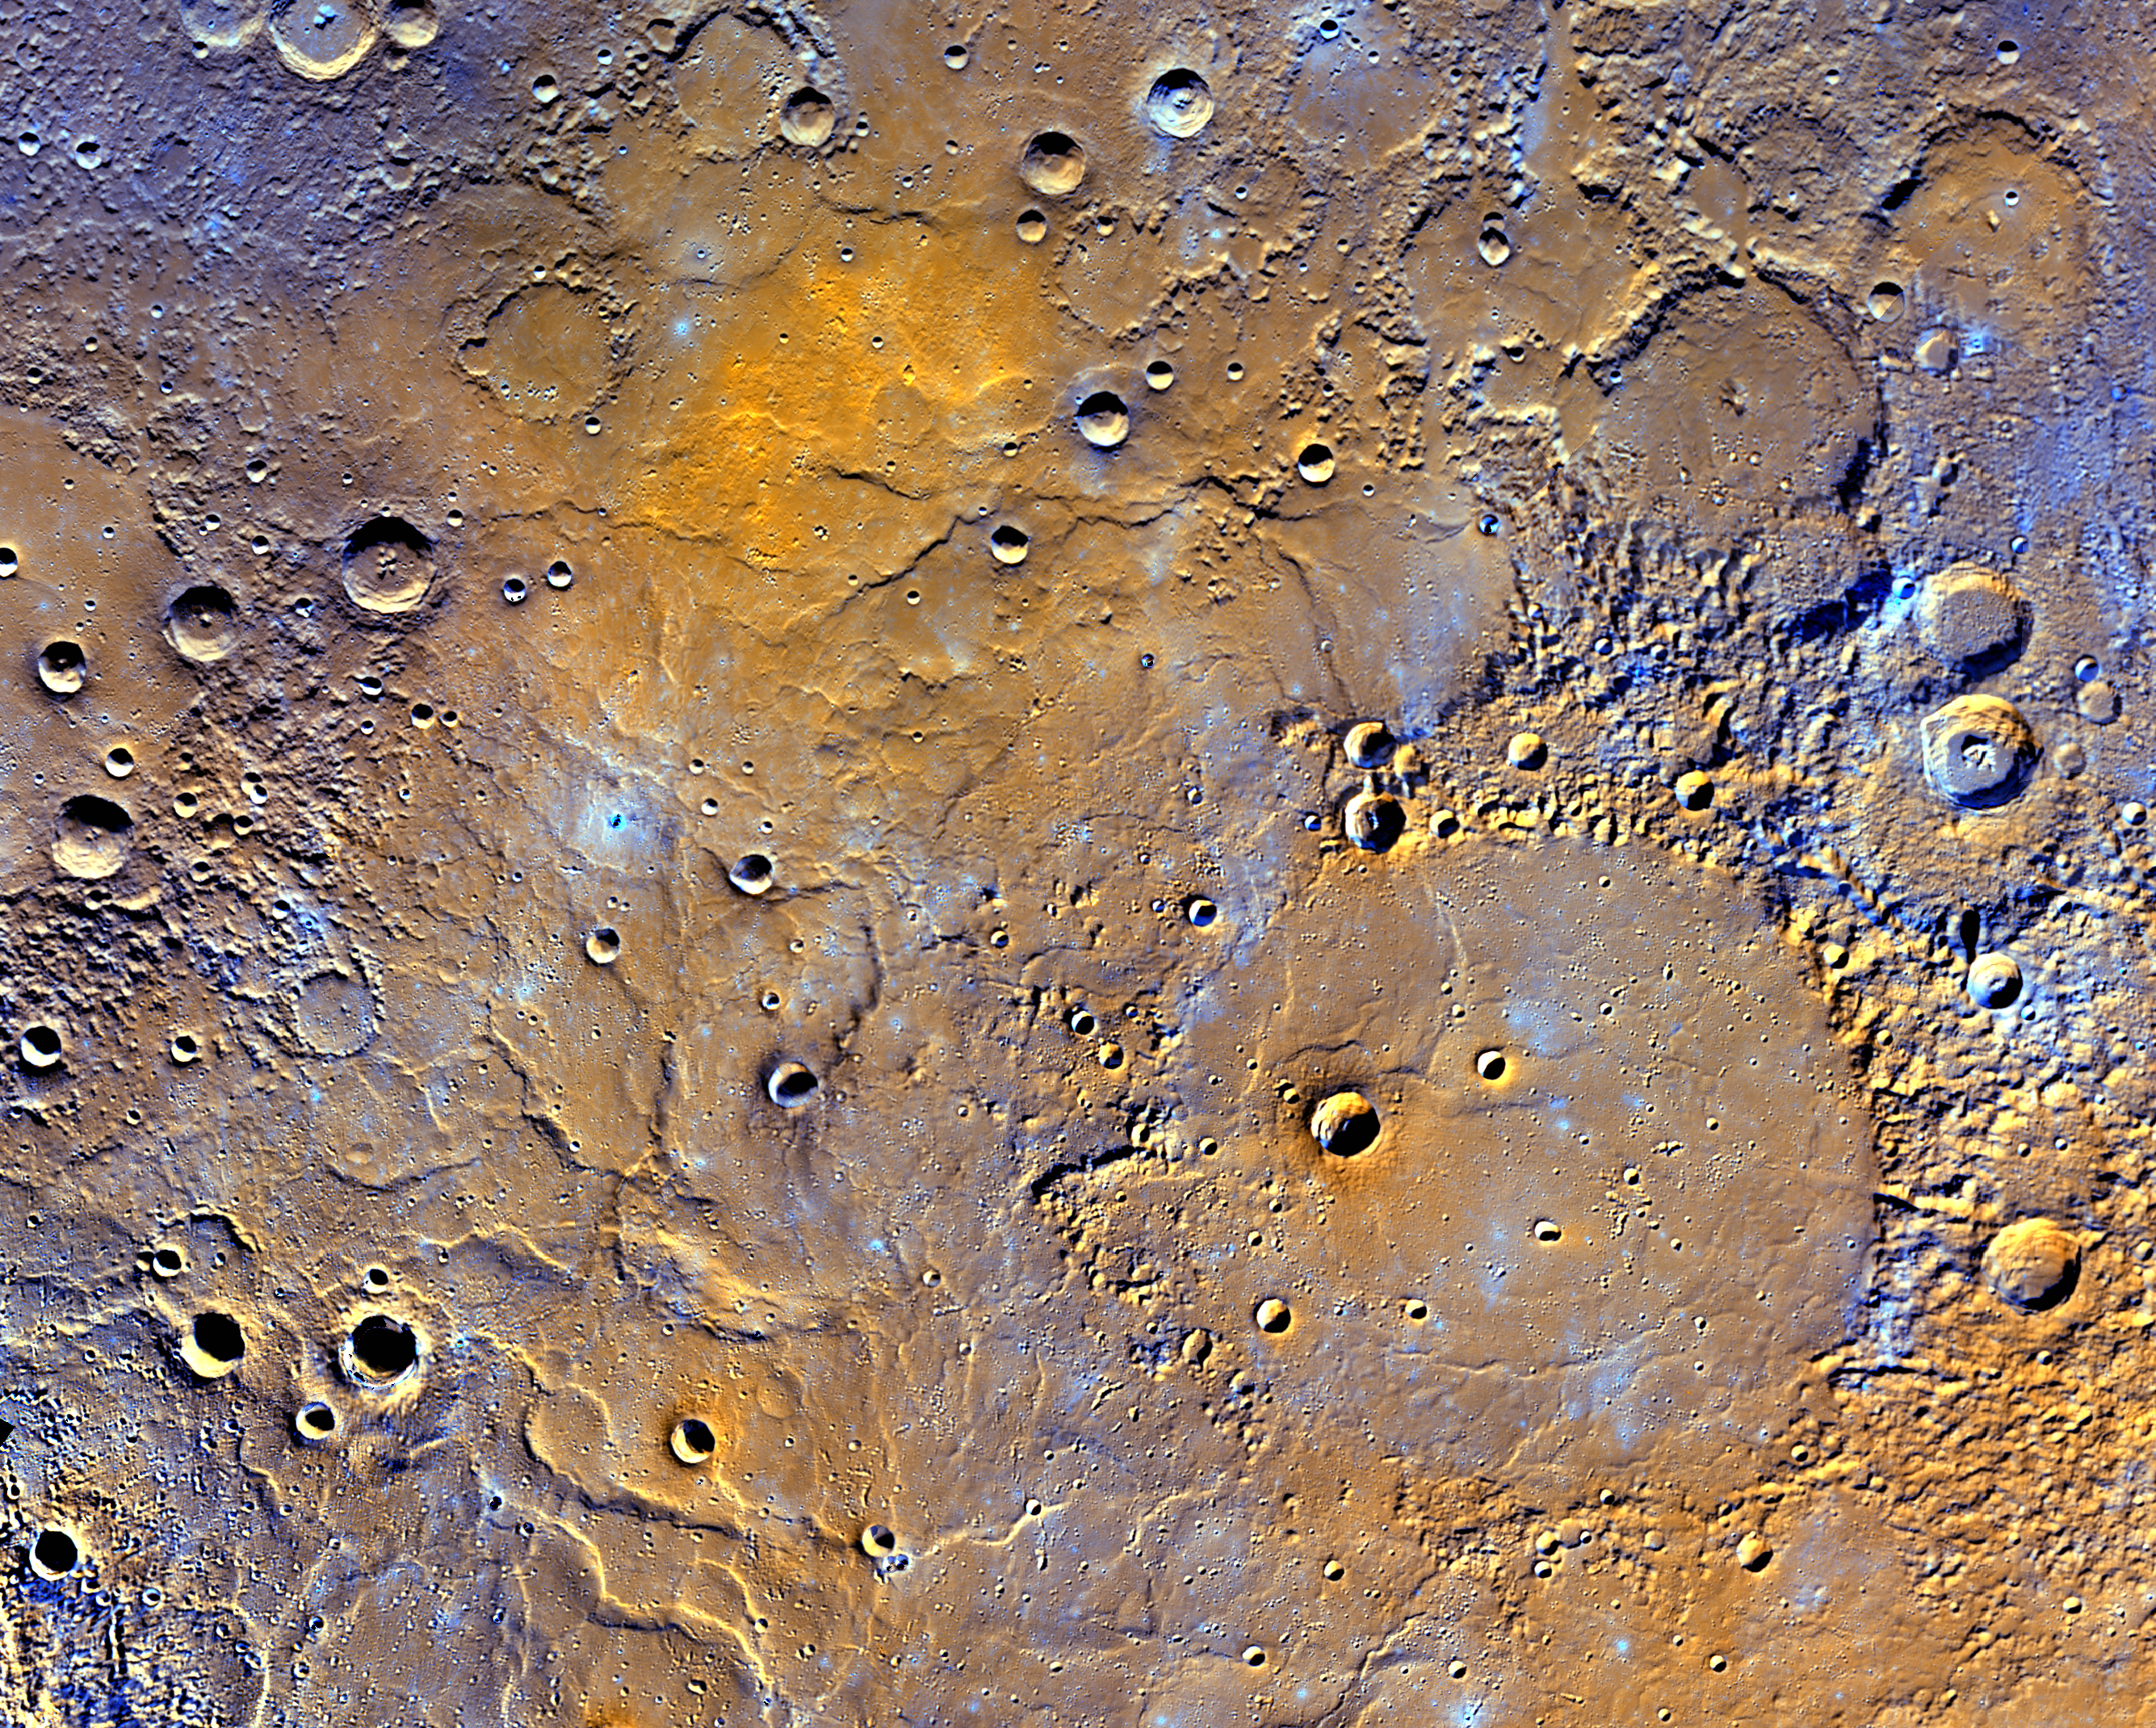 Кратеры меркурия. Меркурий поверхность планеты. Меркурий кратеры. Планета Меркурий НАСА поверхность. Меркурий снимки поверхности.